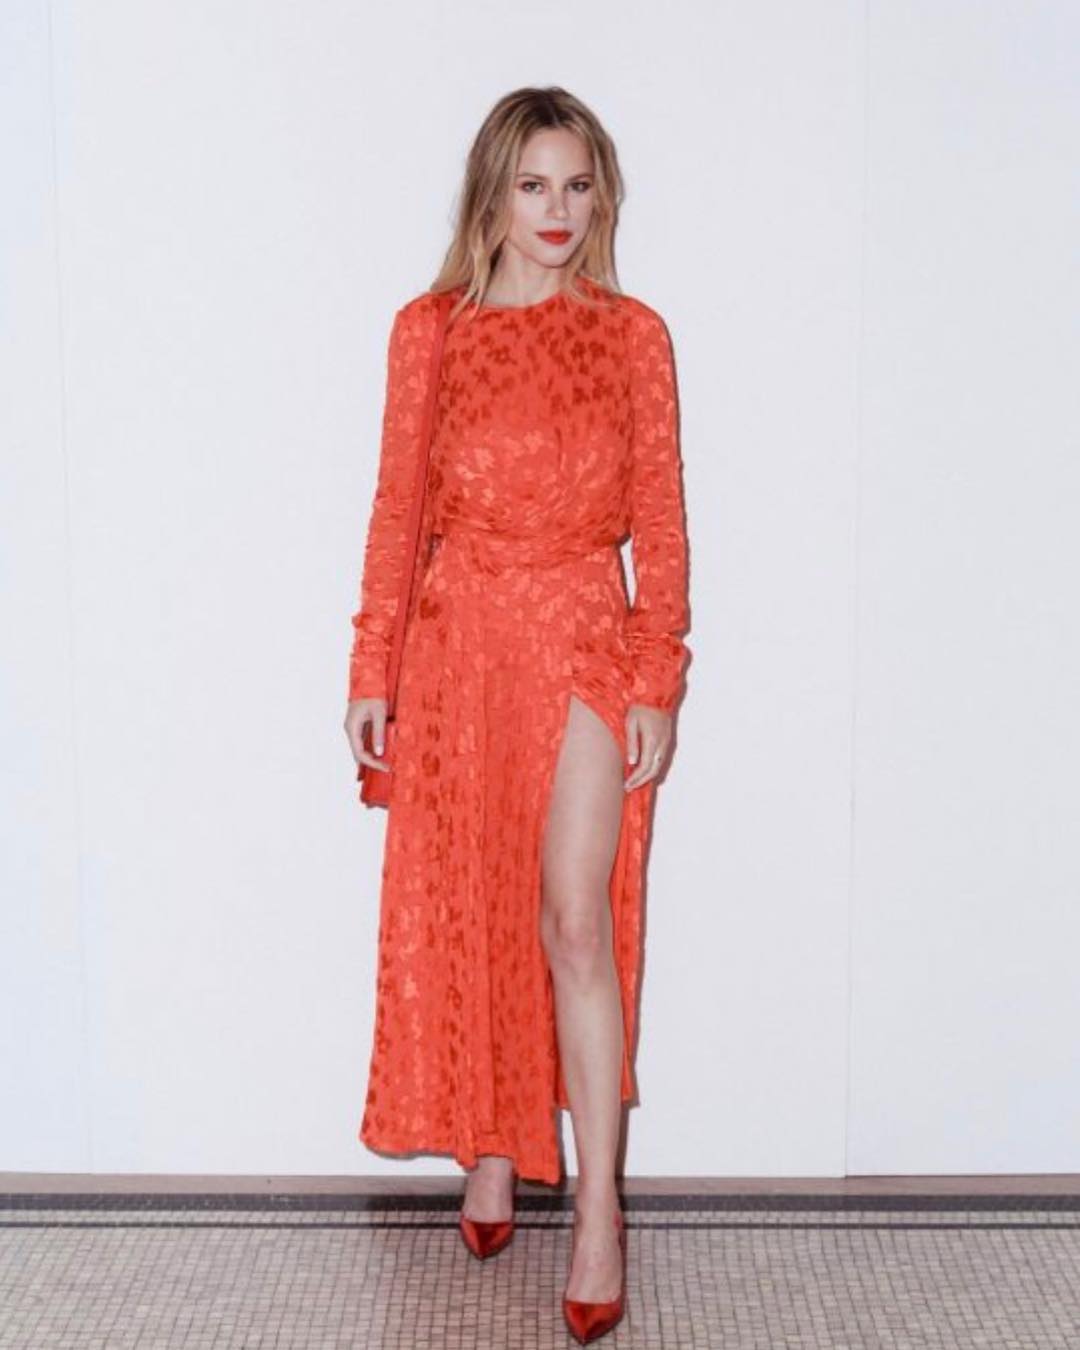 Glossy Halston in Neon-Orange Colored Side Slit One-Piece Dress